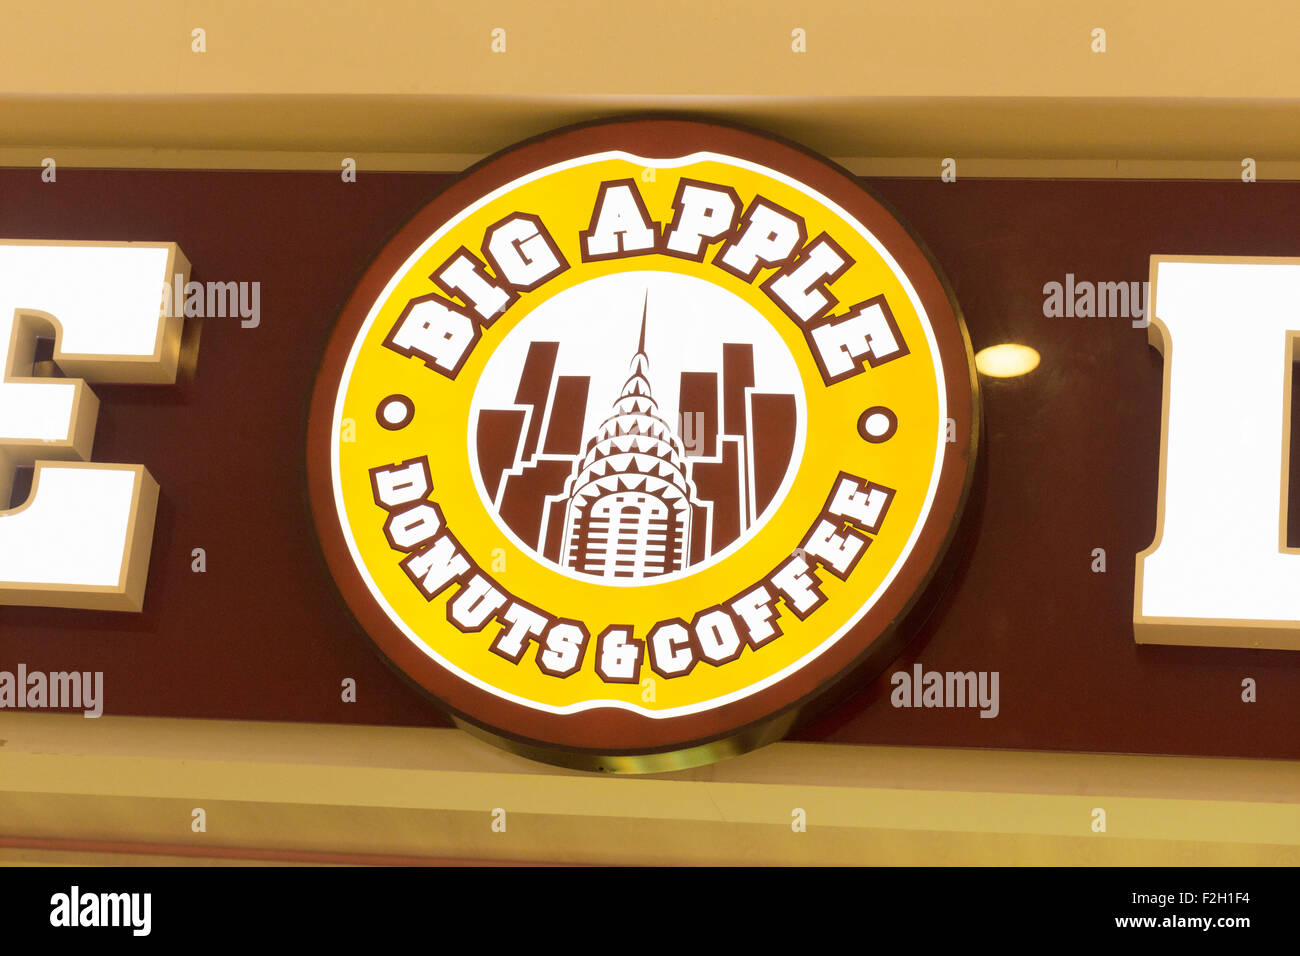 Big apple donuts & coffee logo Stock Photo